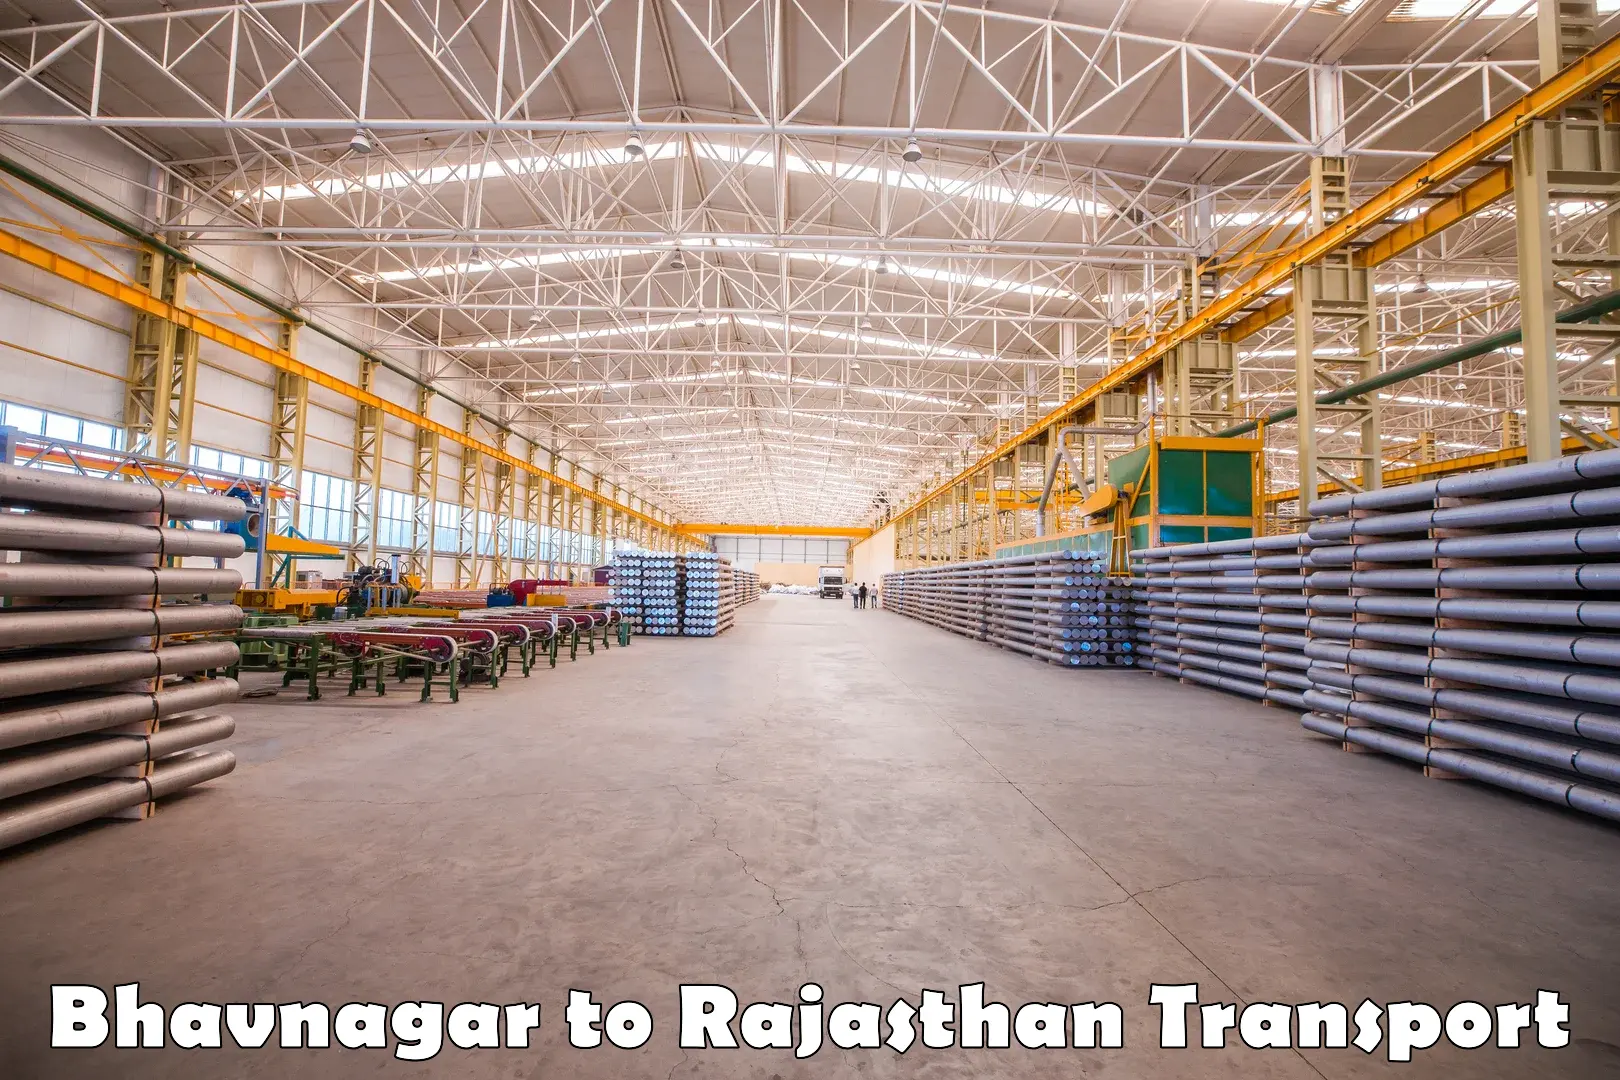 Truck transport companies in India Bhavnagar to Anupgarh